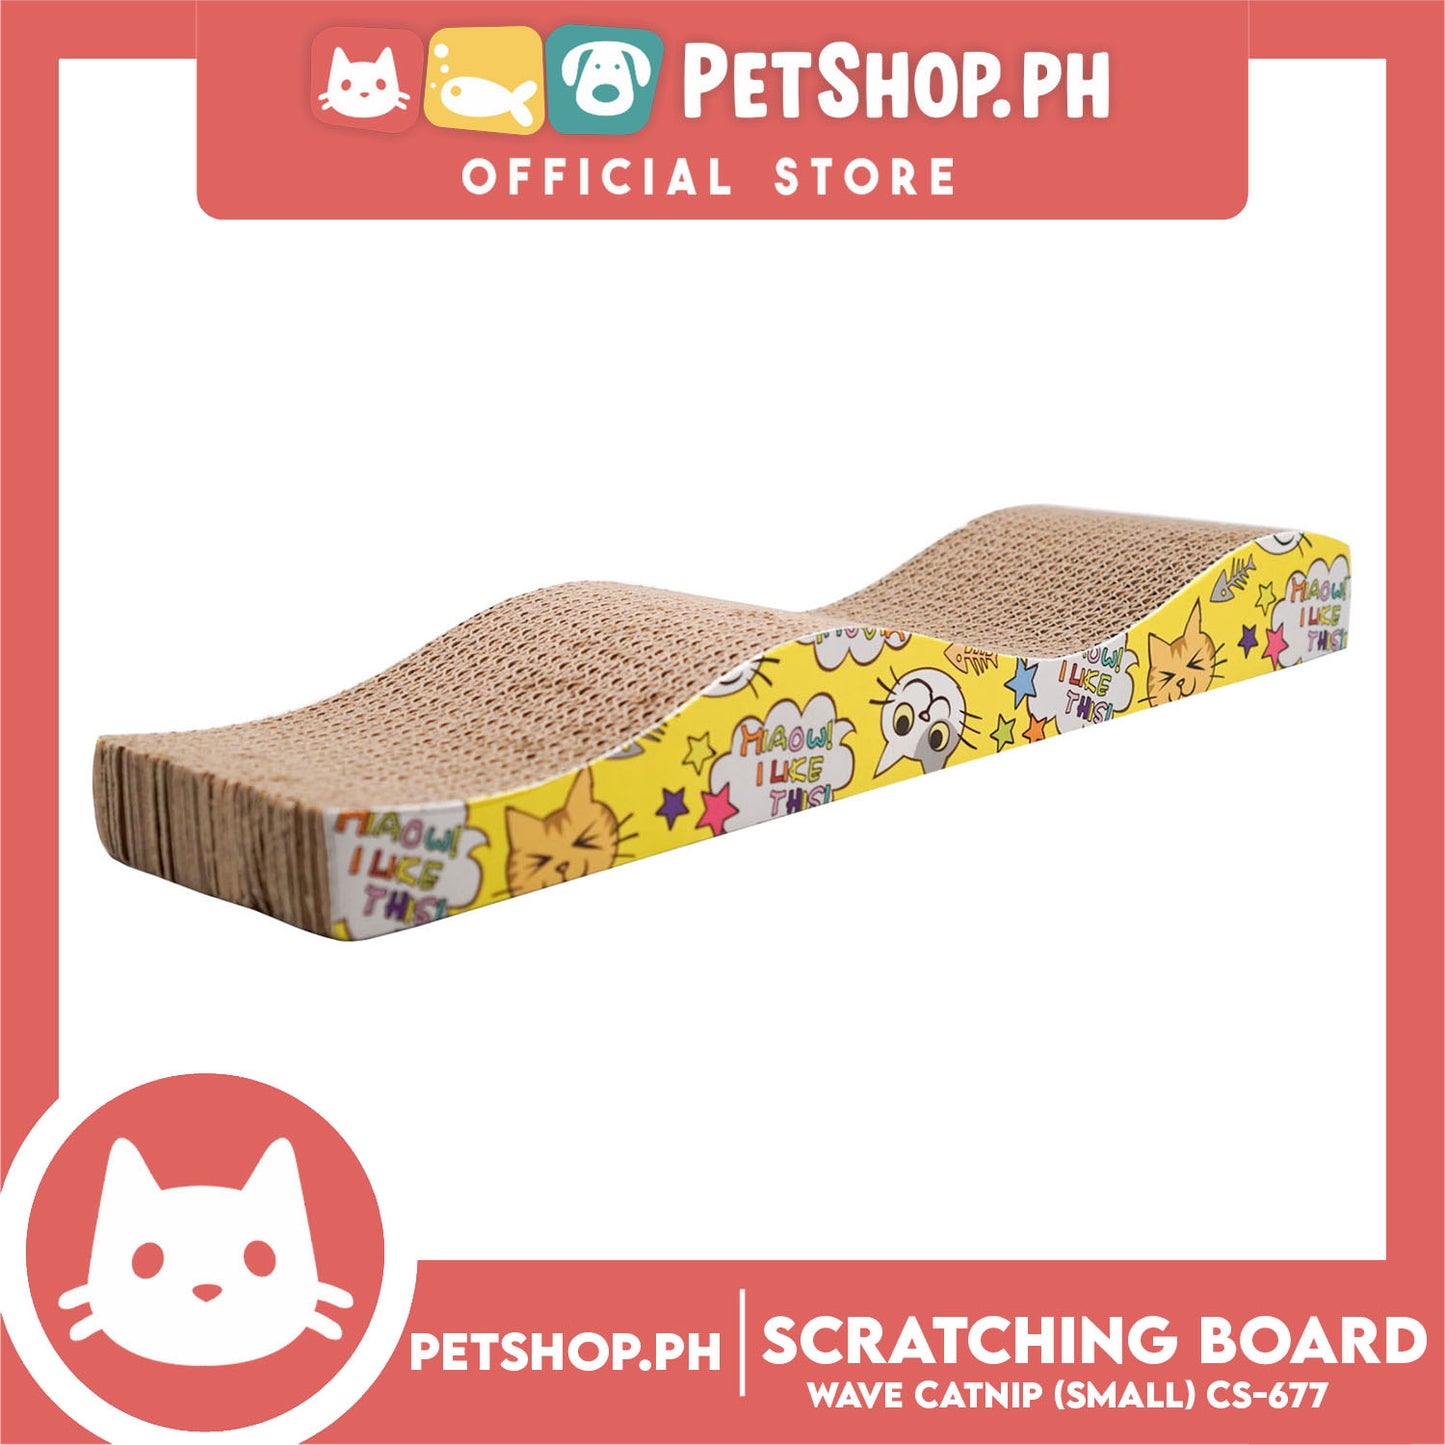 Pet Cat Scratching Board Corrugated Cardboard Pad Wave with Catnip (Small) CS-677 - Kitten Scratcher